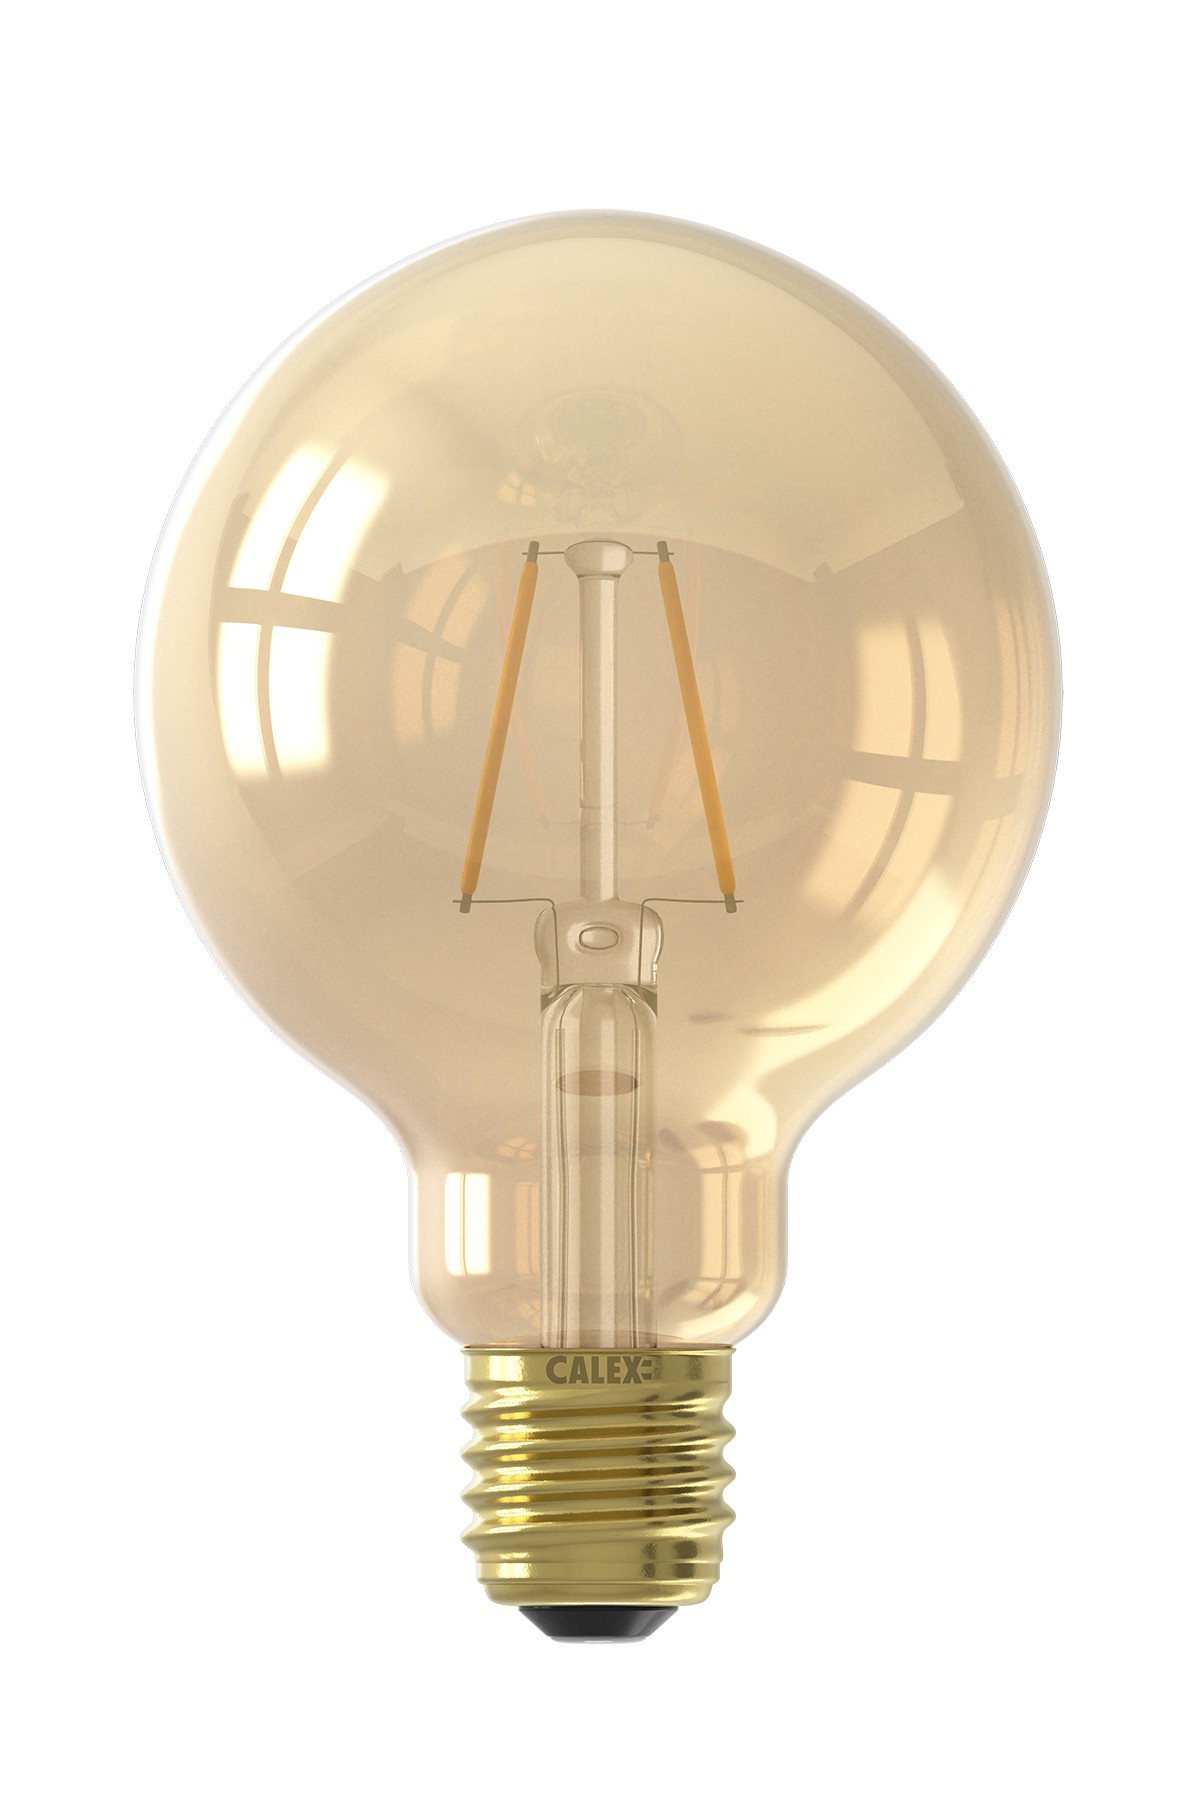 https://www.warentuin.nl/media/catalog/product/S/C/SCAN8712879140030_calex_lamp_led_full_glass_filament_globe_lamp_220_240v_2w_130_aa01.jpg